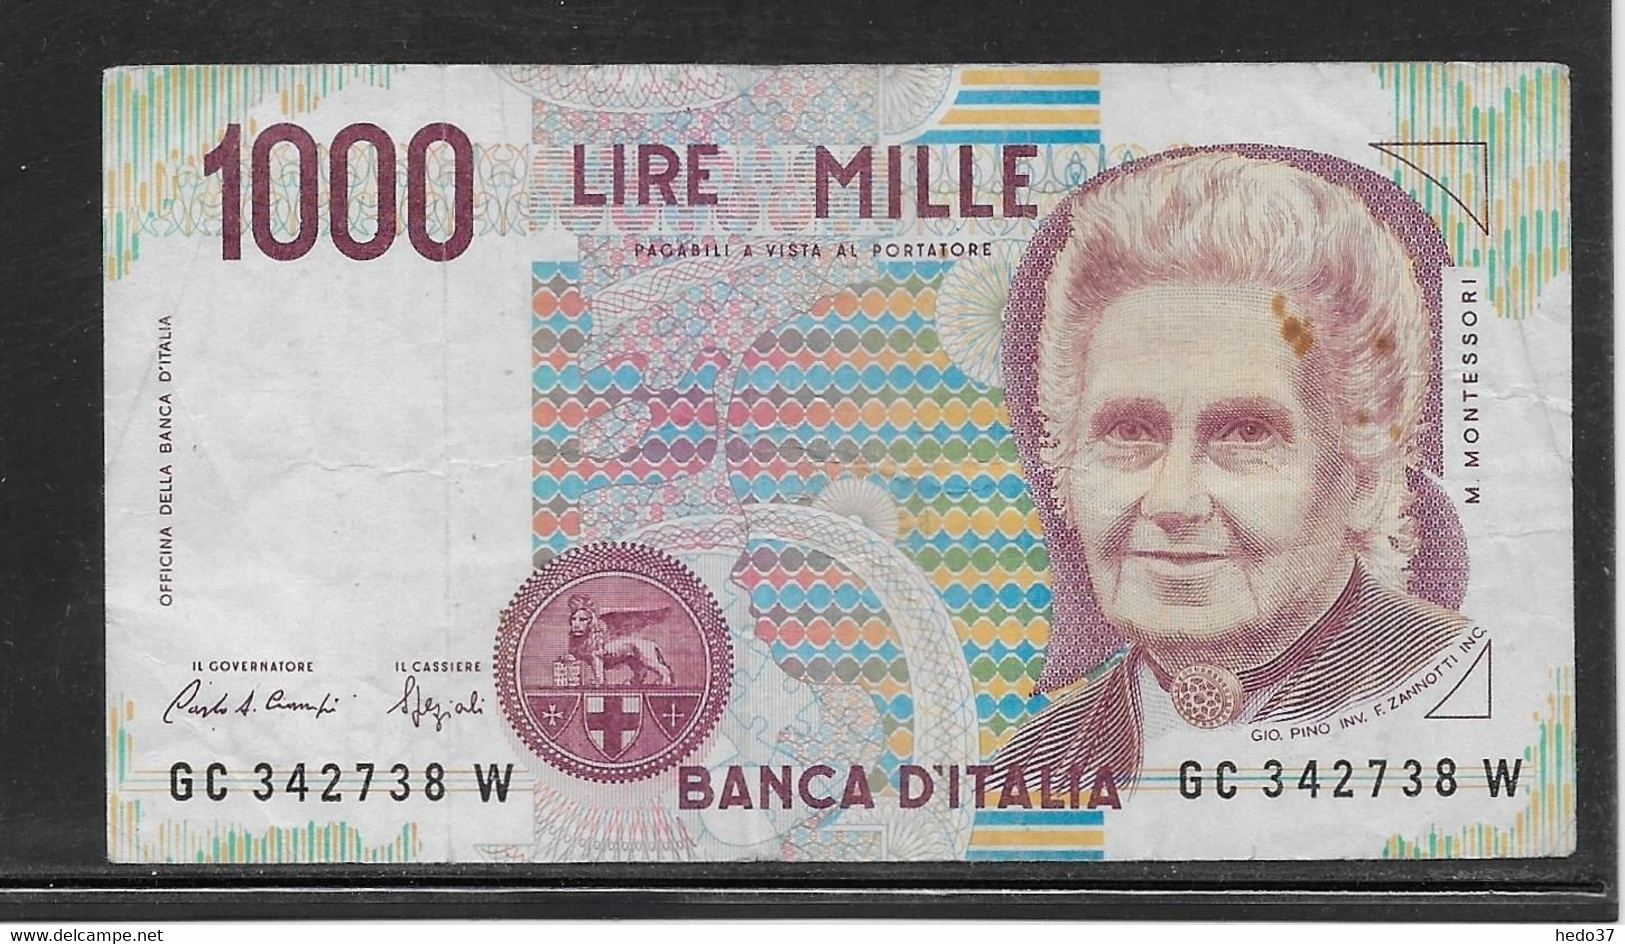 Italie - 1000 Lire - Pick N°114 - TTB - 1000 Lire